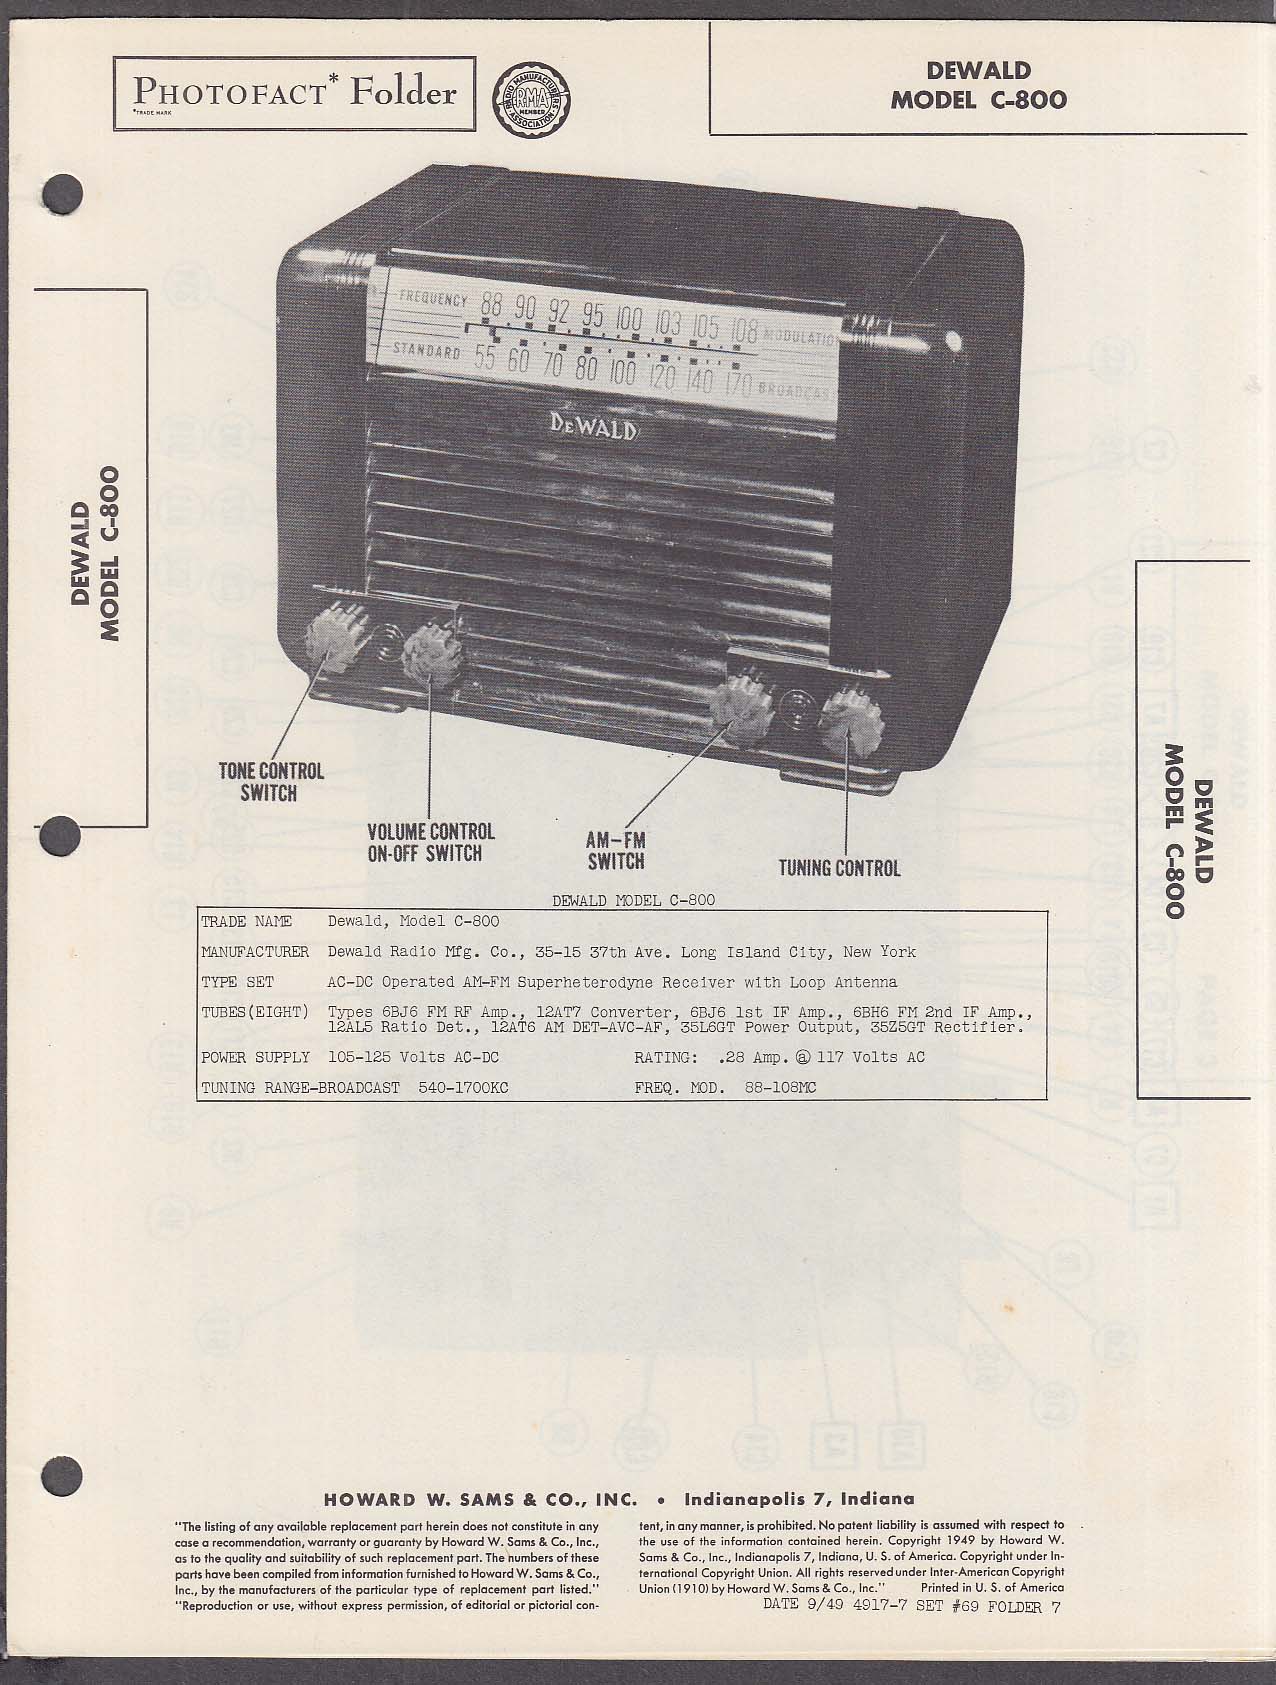 Dewald Radio Model C-800 Photofact Folder 1949